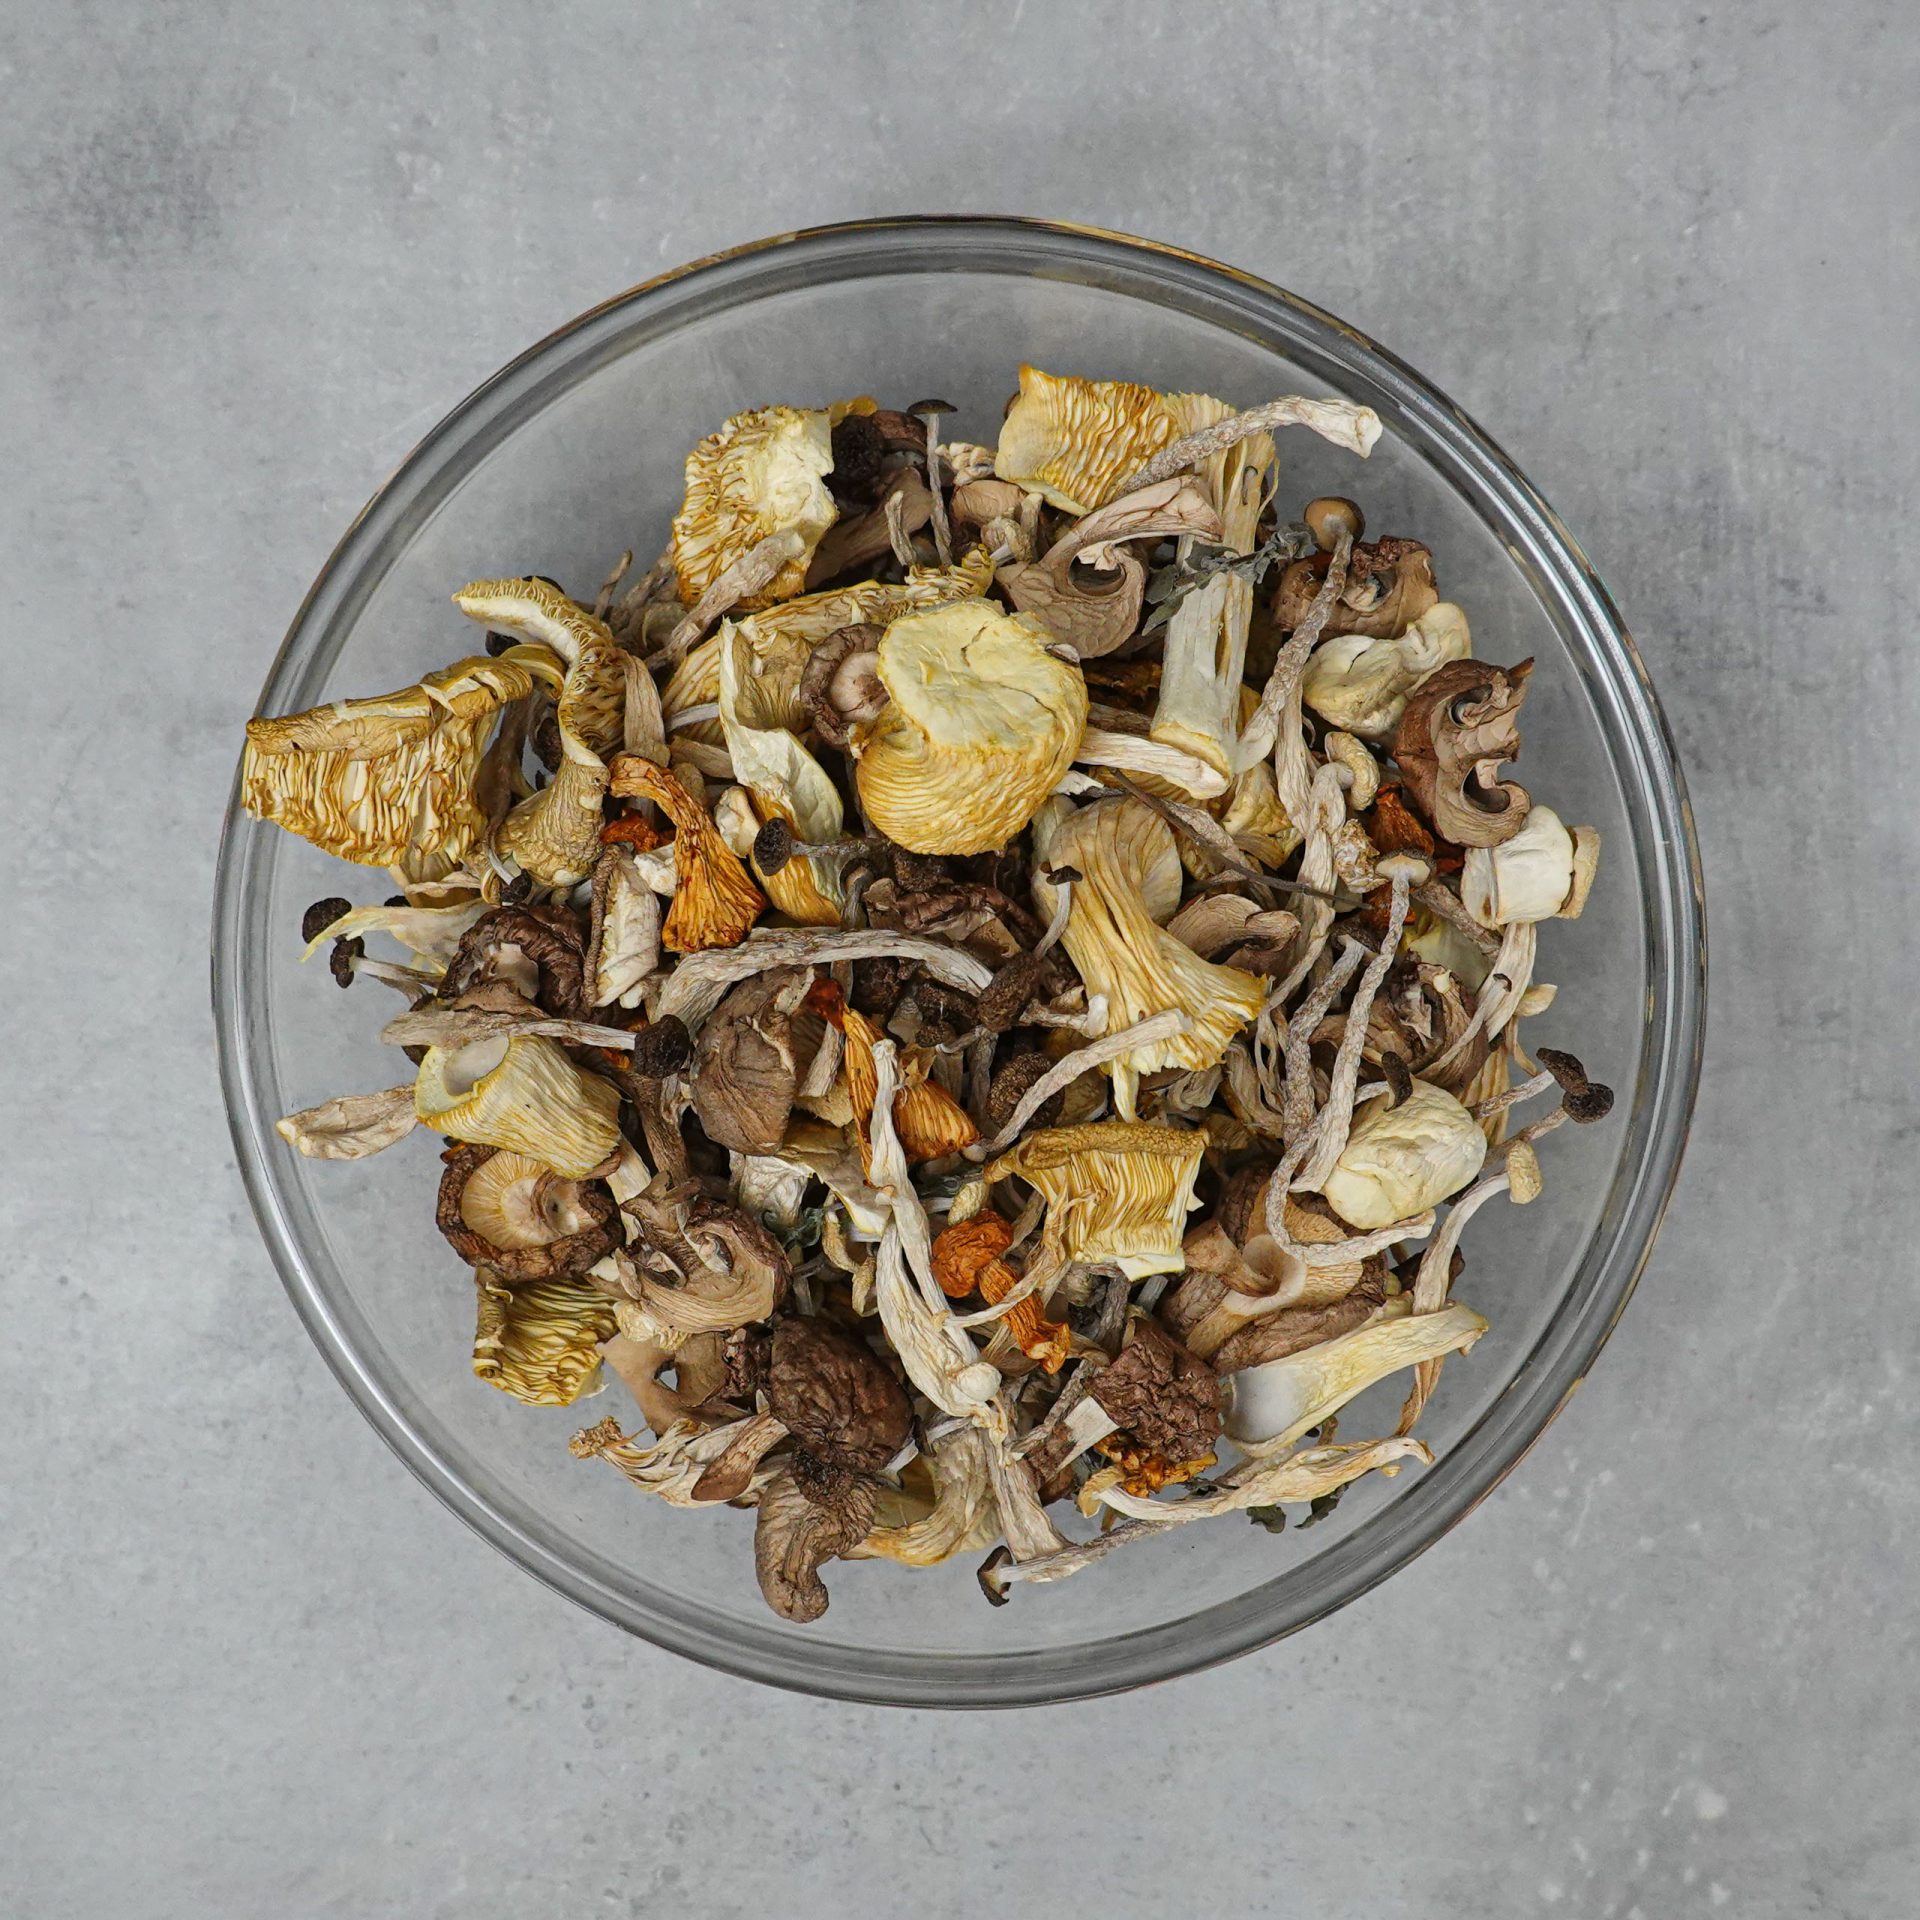 Recipe development mushrooms as a snack: mushroom mix